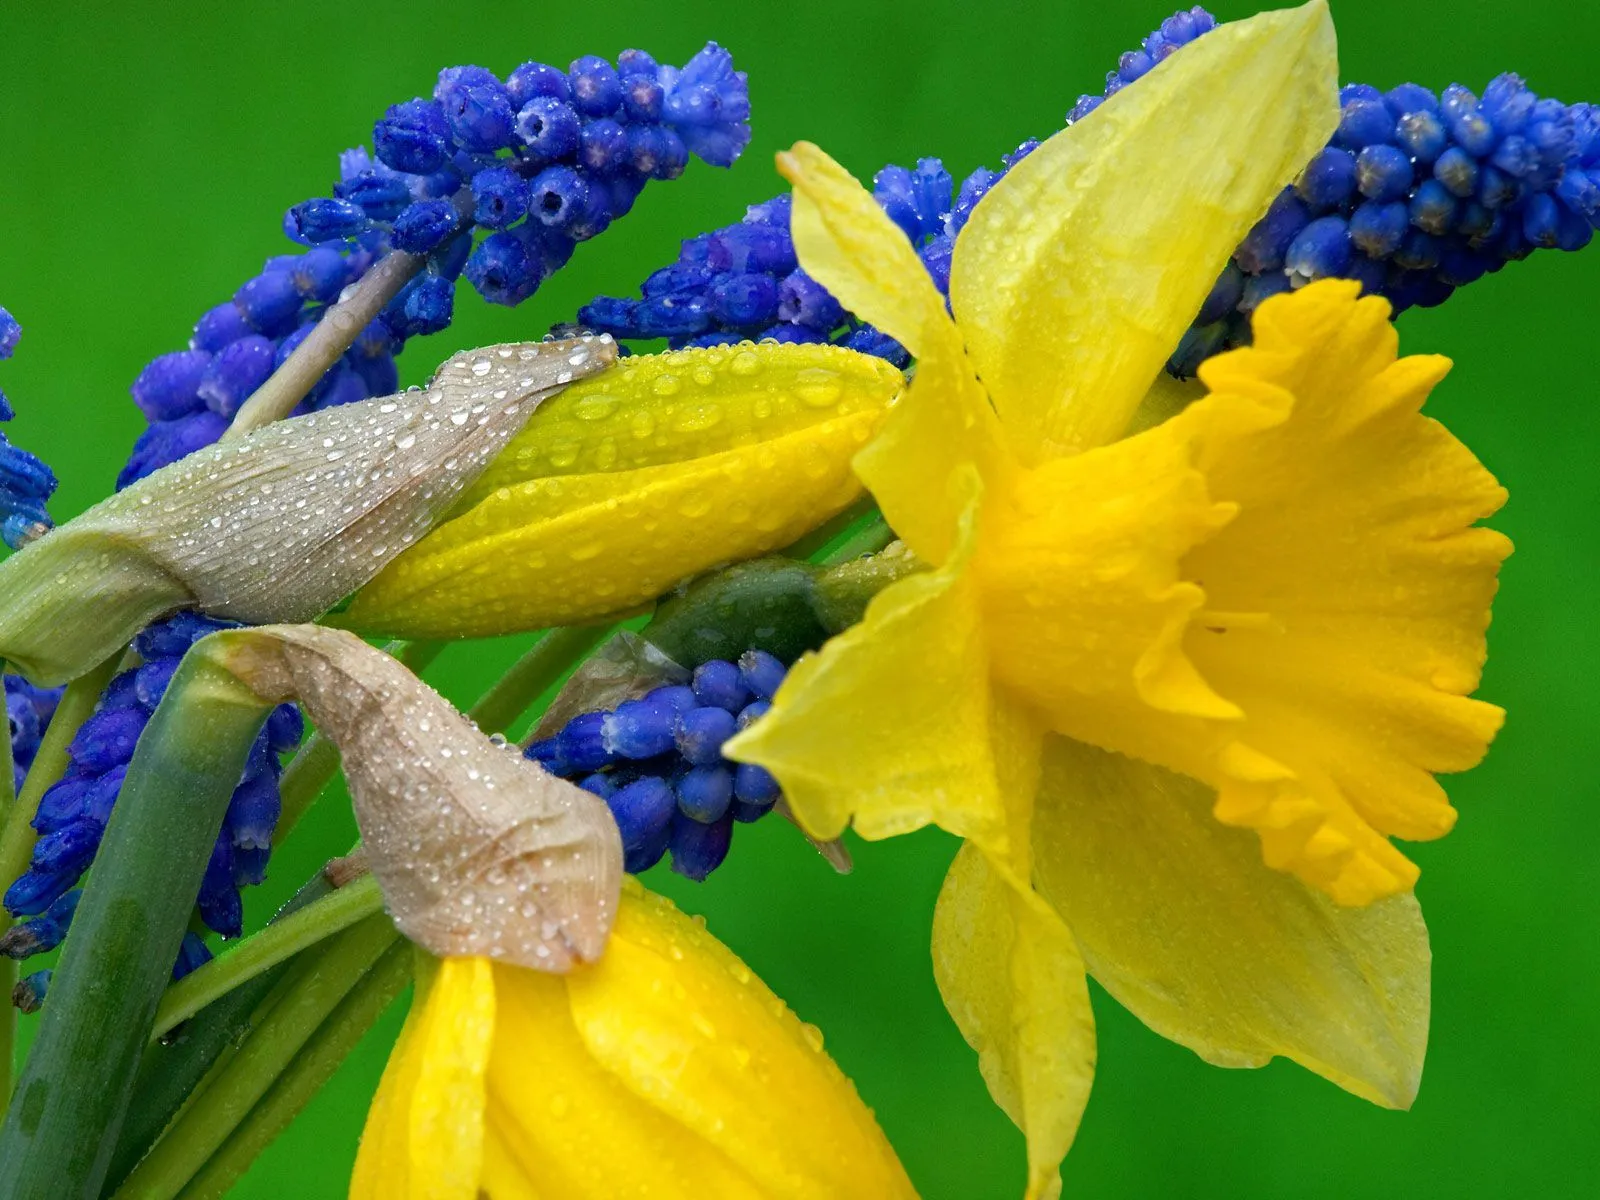 Flores del campo VI (7 beautiful colors flowers) | Banco de Imagenes